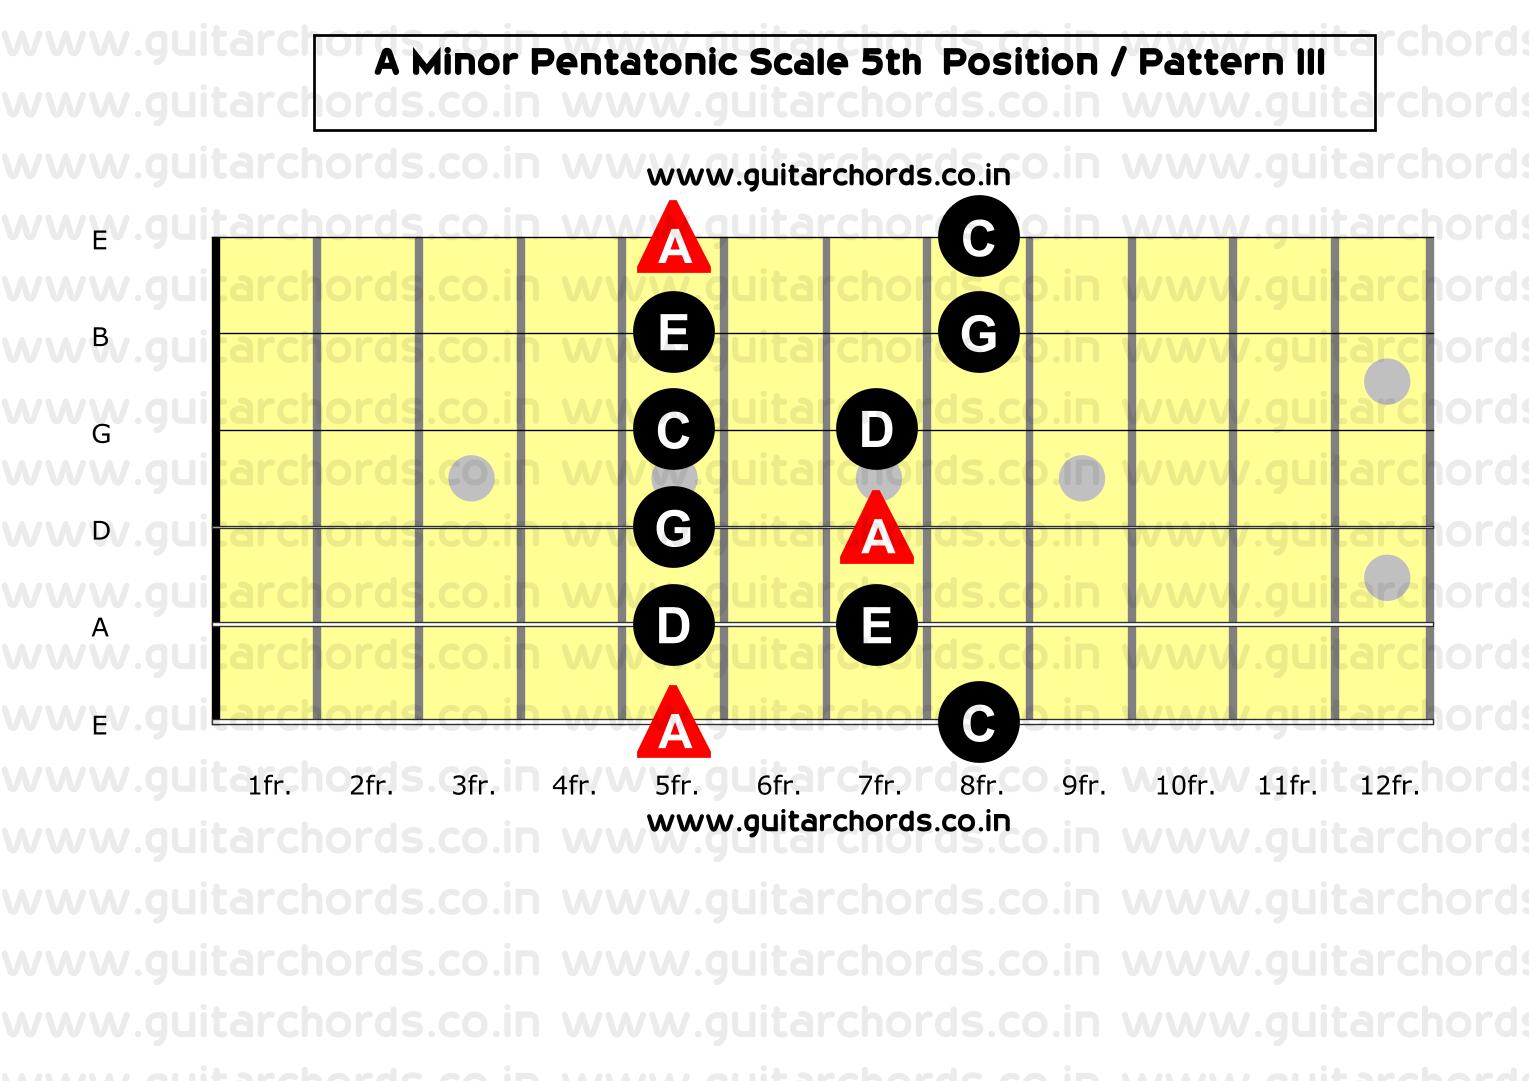 a-minor-pentatonic-5th-position-guitar-chords